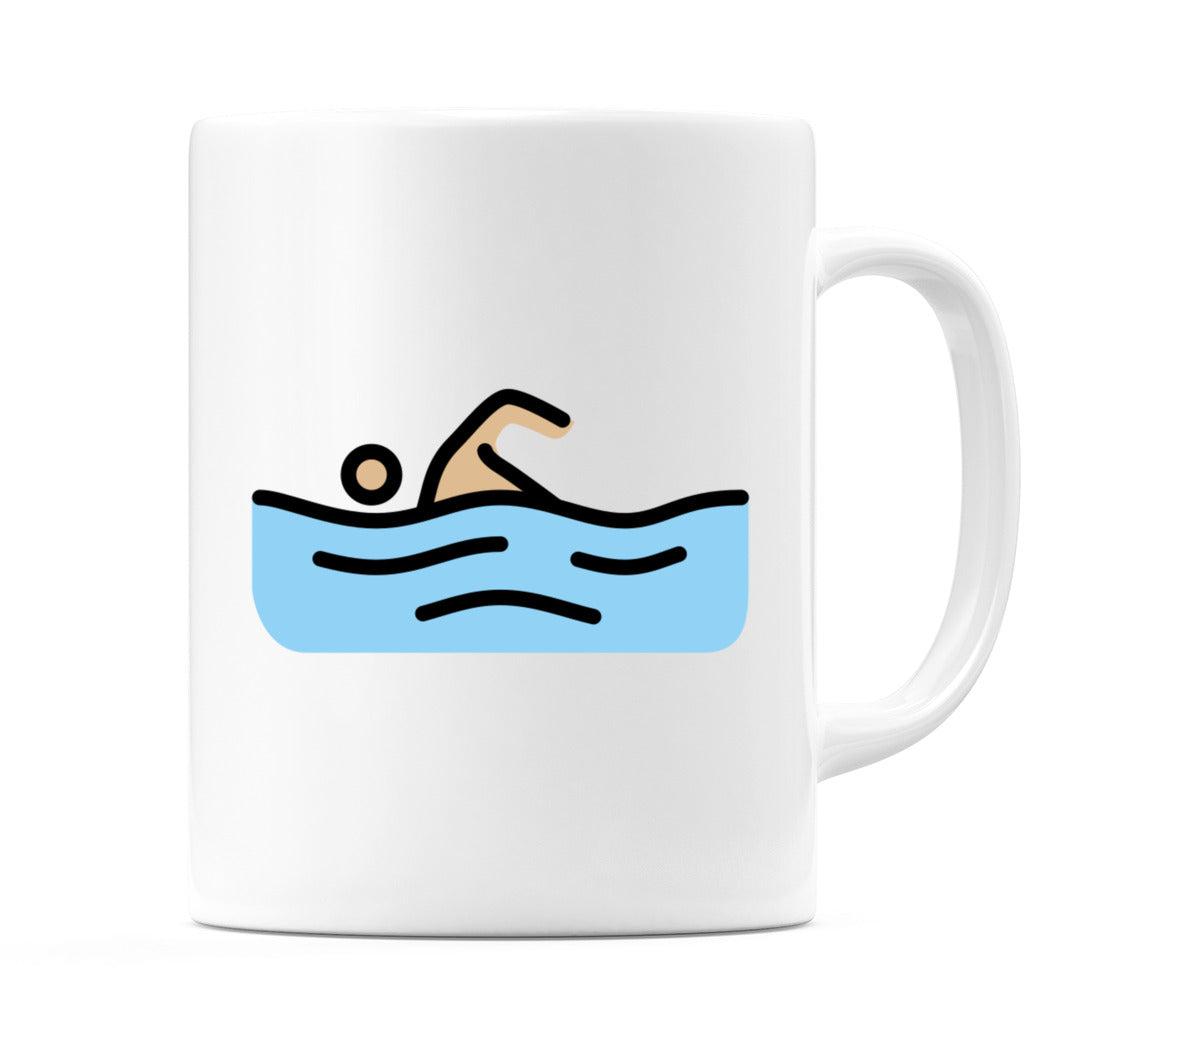 Person Swimming: Medium-Light Skin Tone Emoji Mug